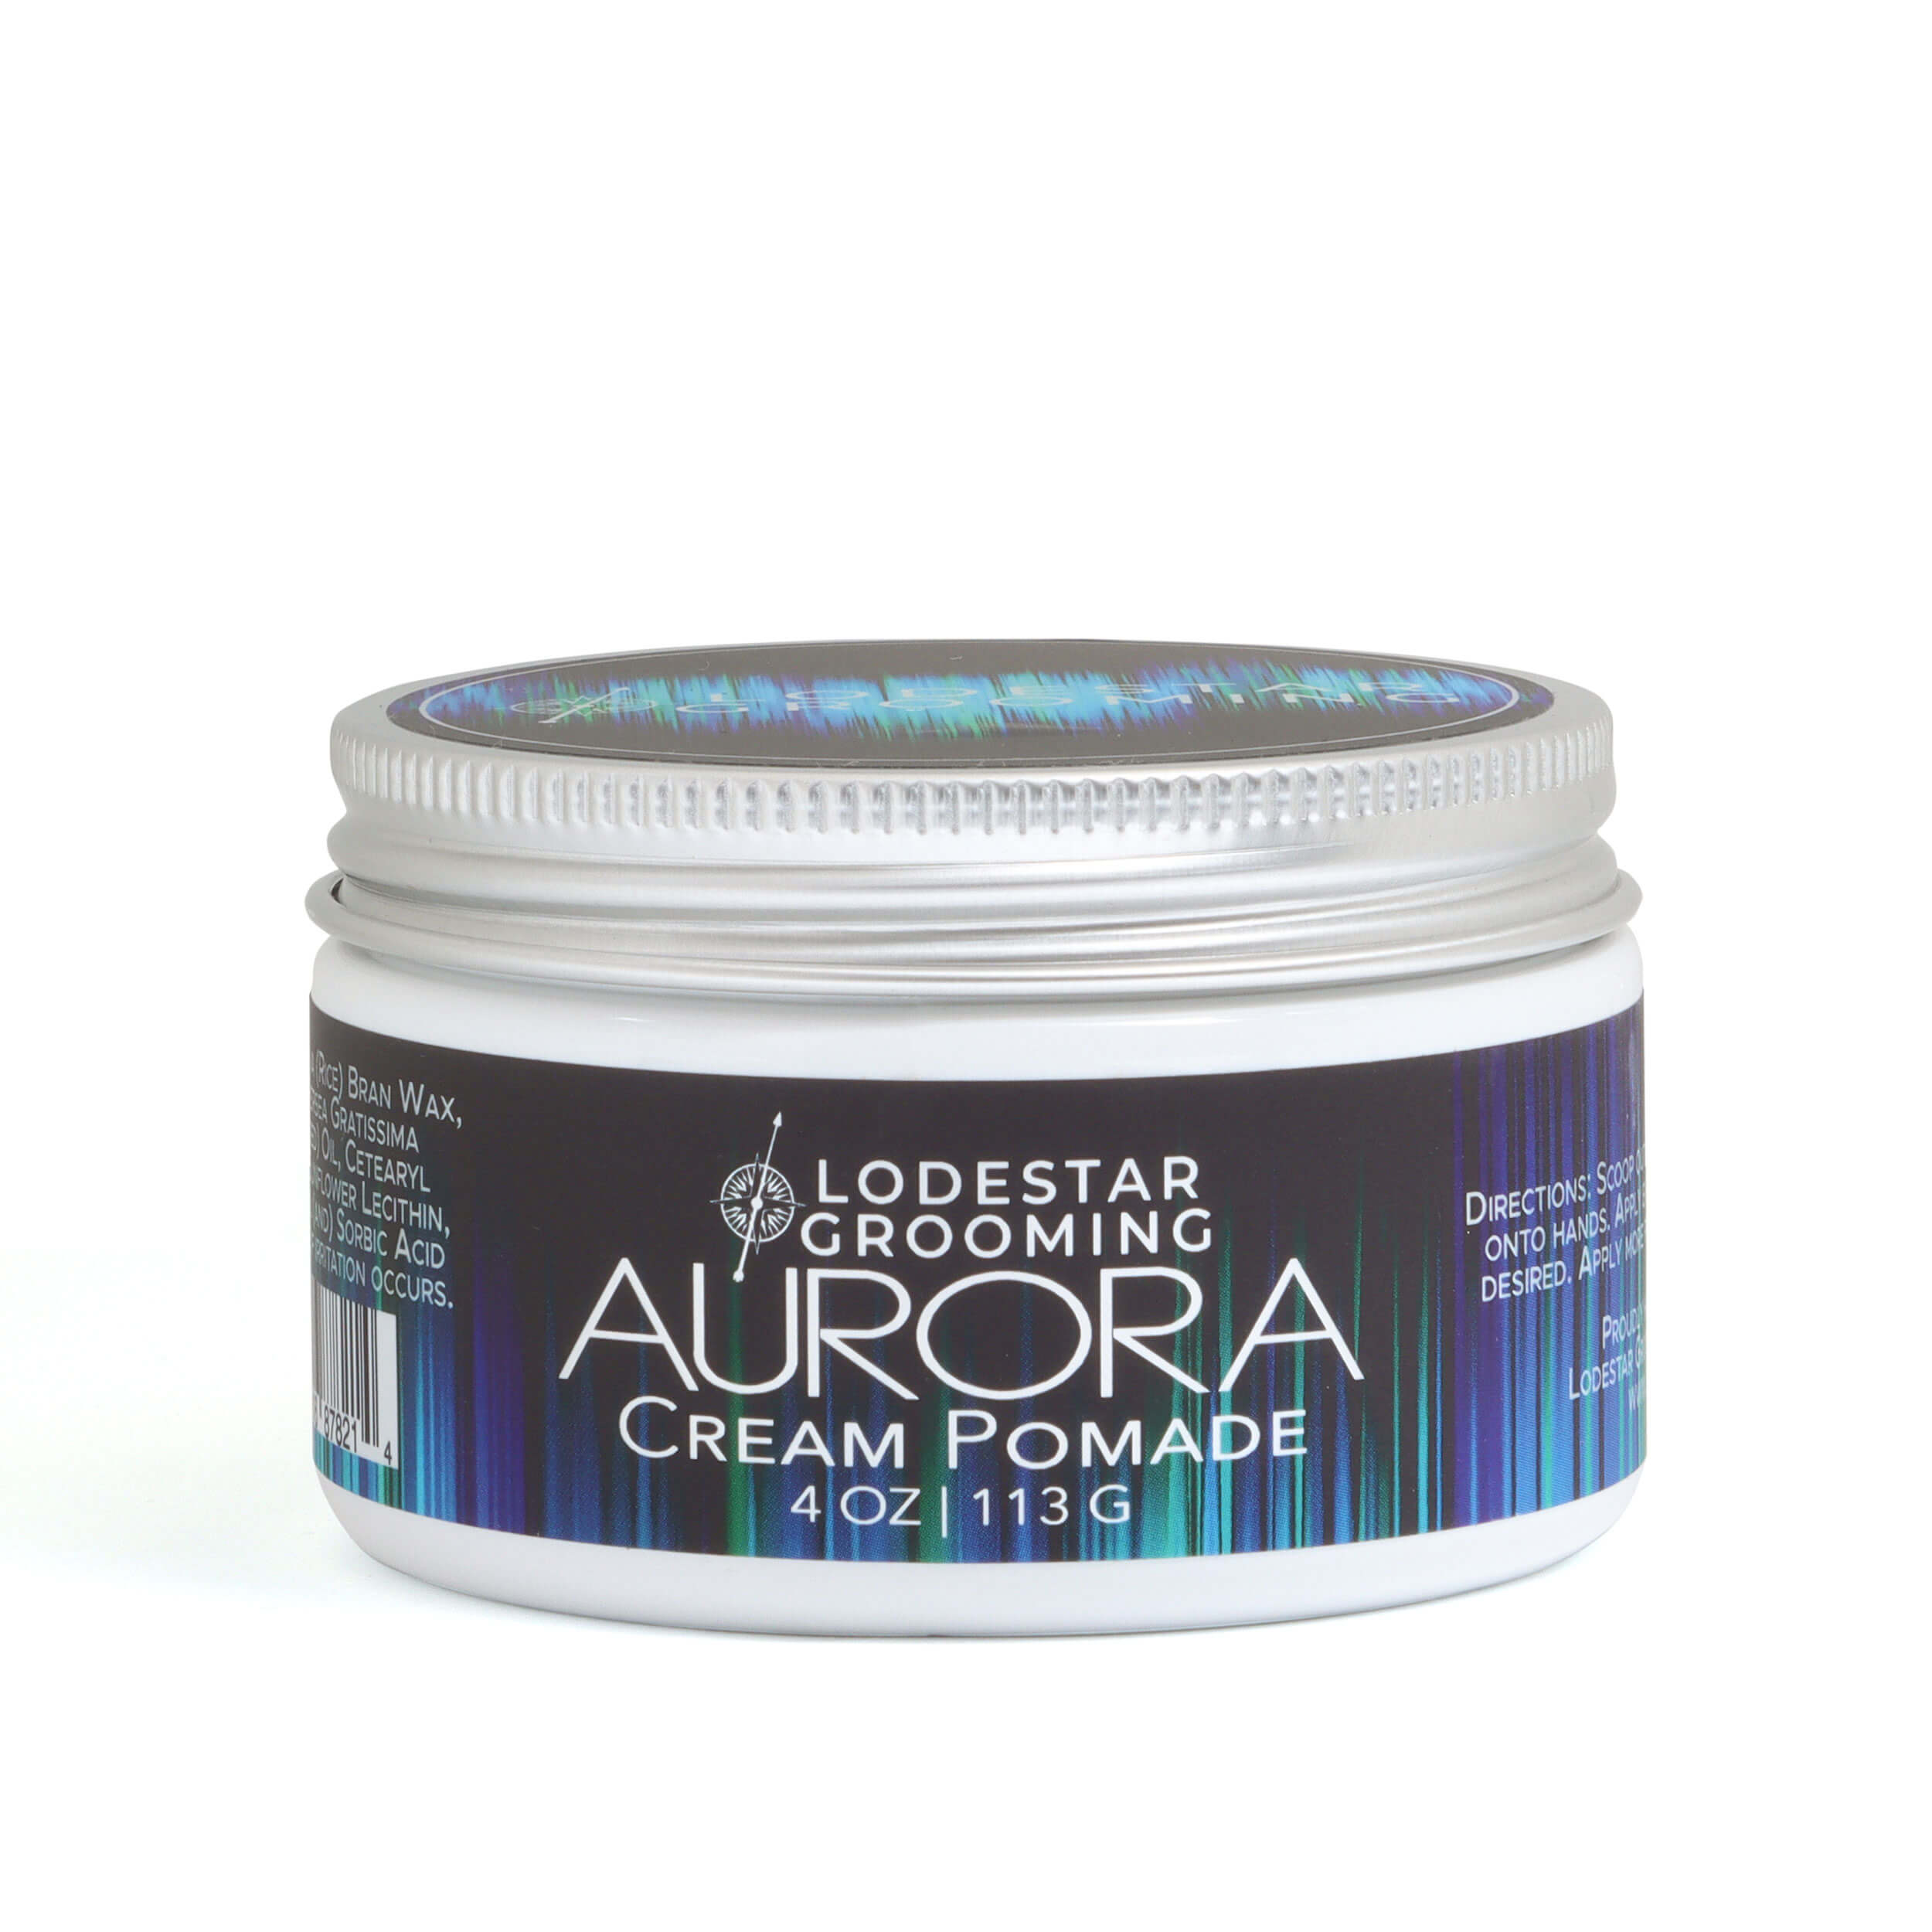 Lodestar Grooming Aurora Cream Pomade